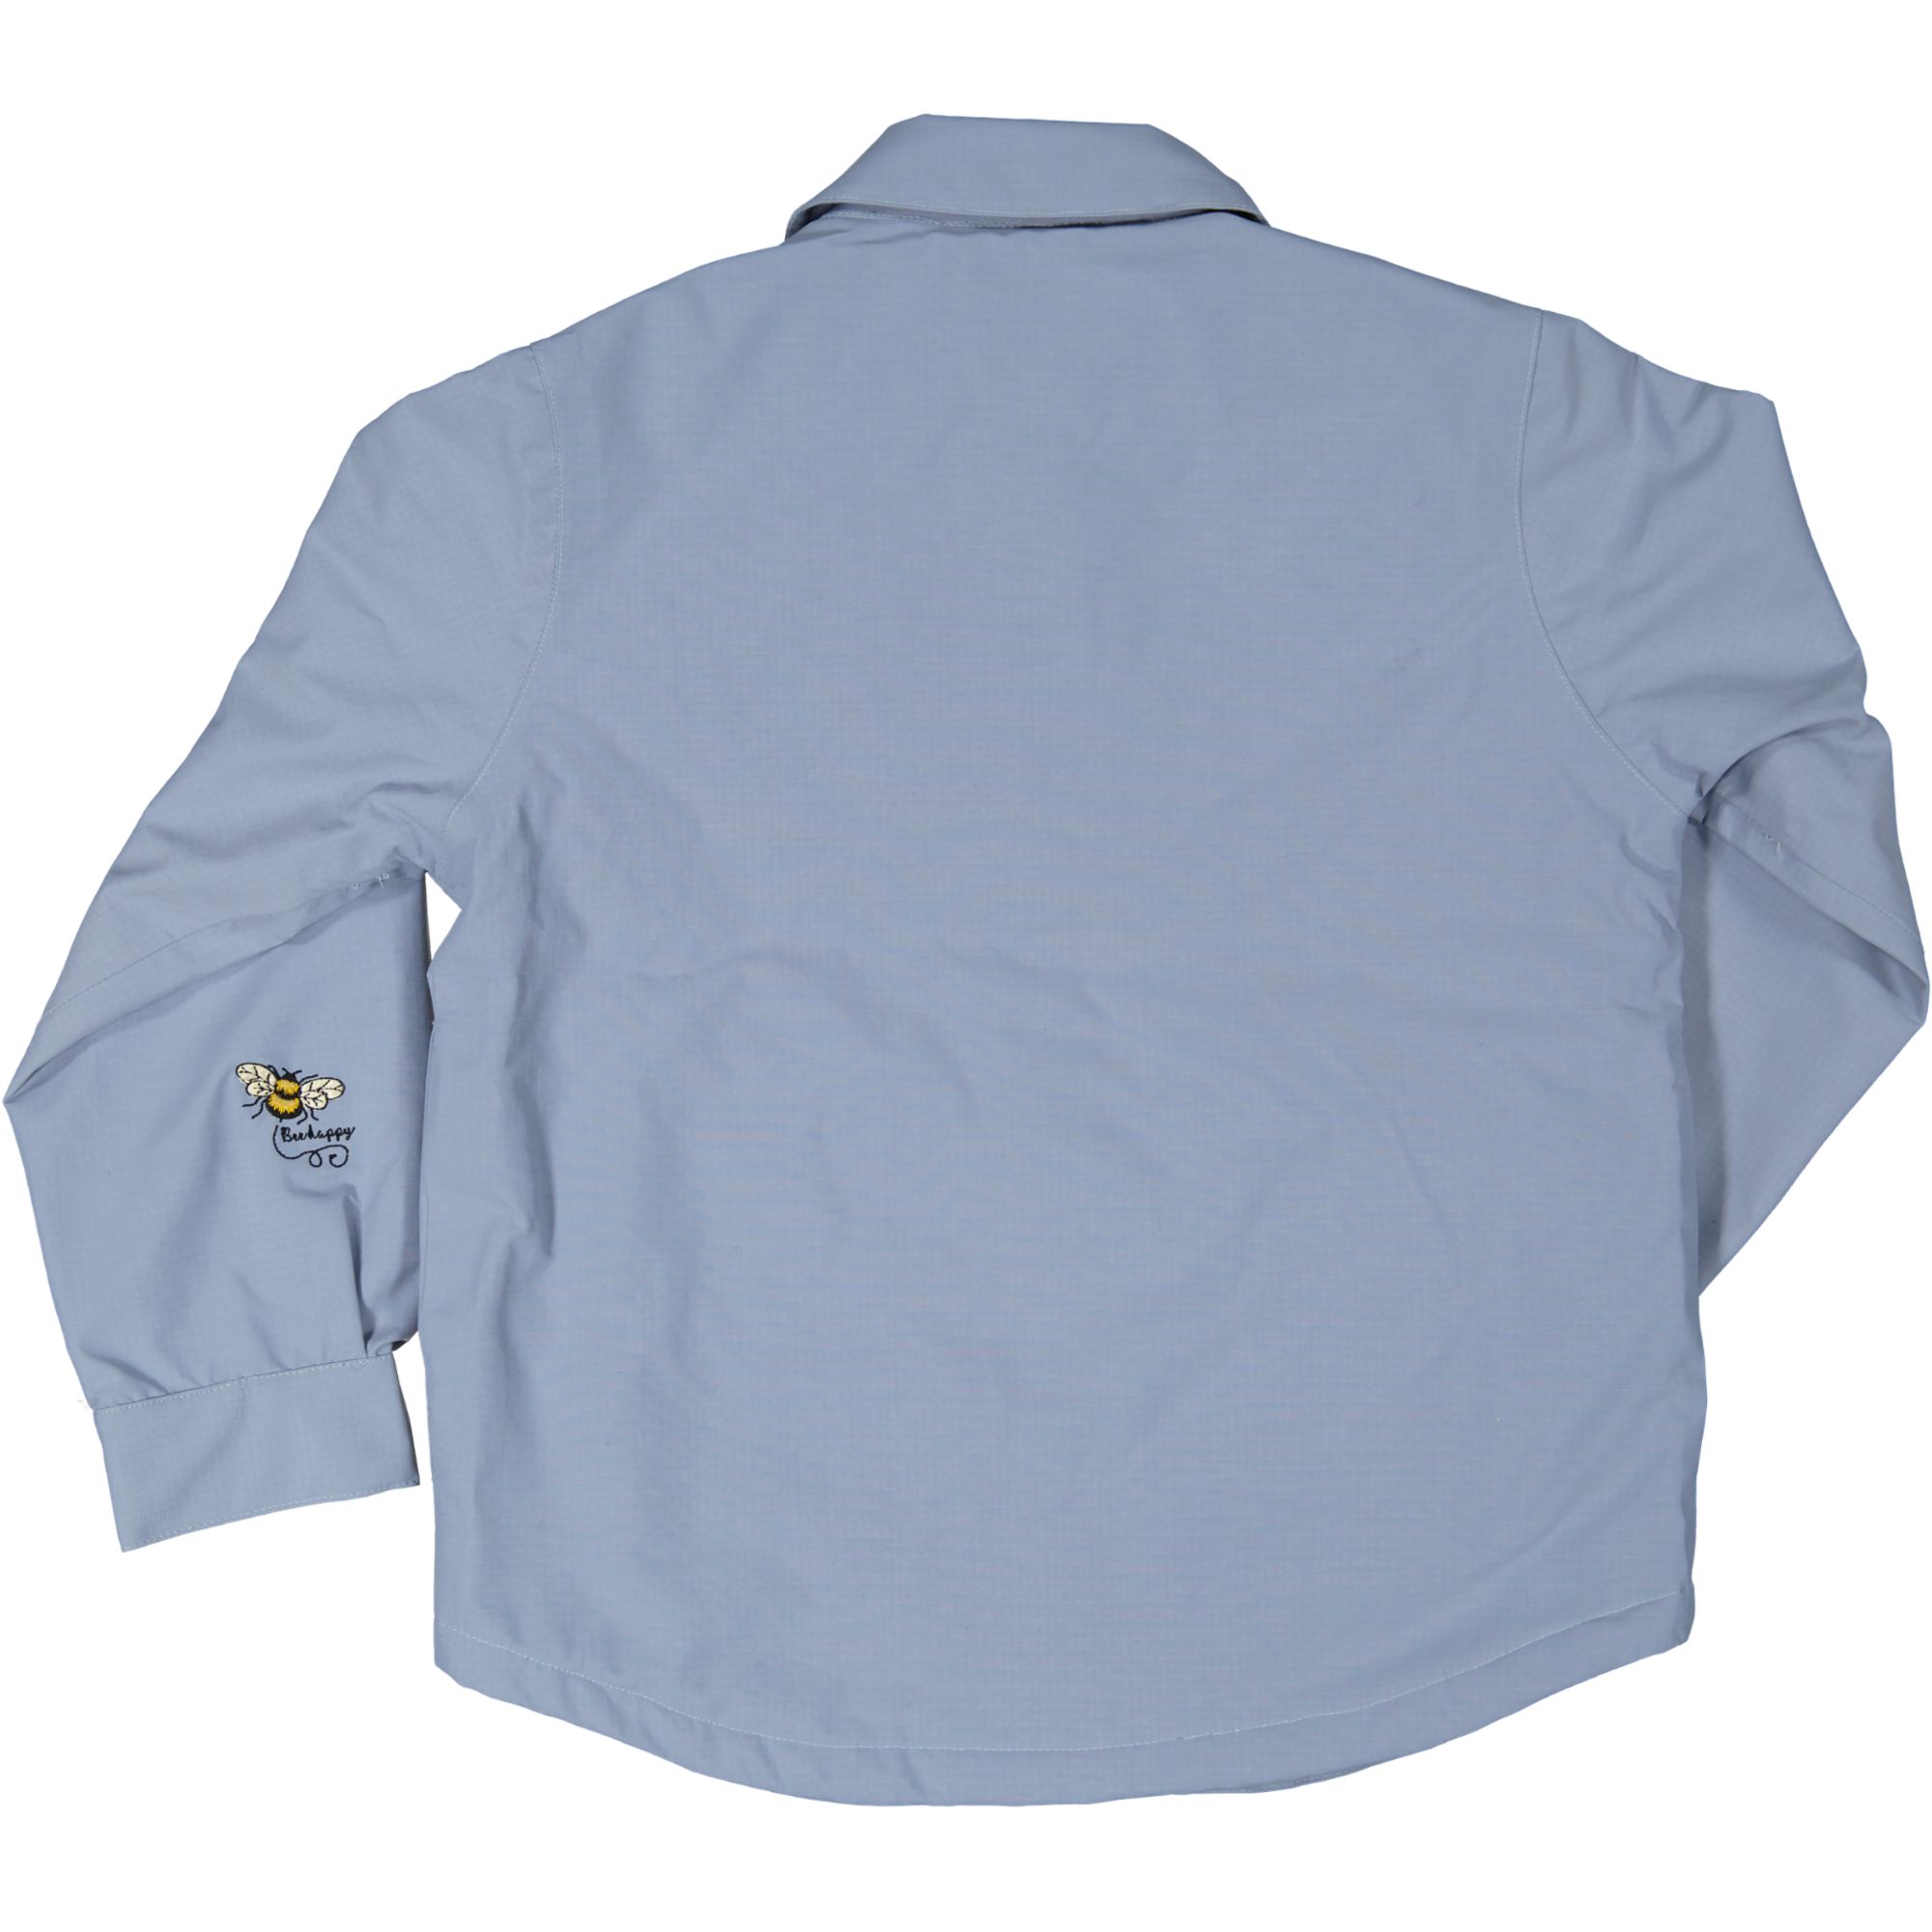 Shell Jacket/Over shirt Dusty Blue